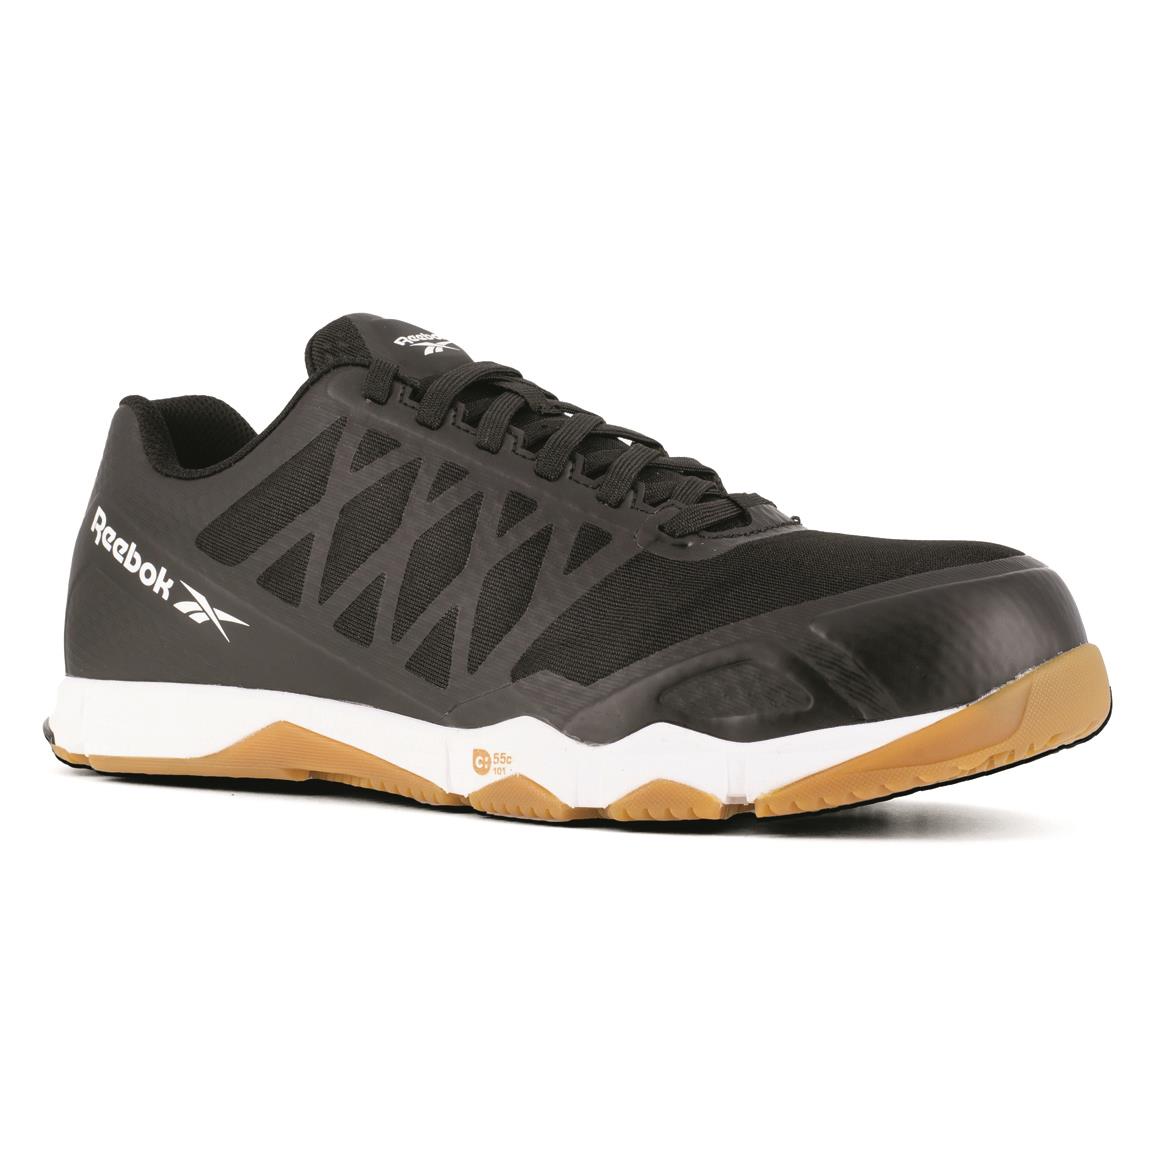 Reebok Men's Speed Training Comp Toe Athletic Work Shoes, Black/gum